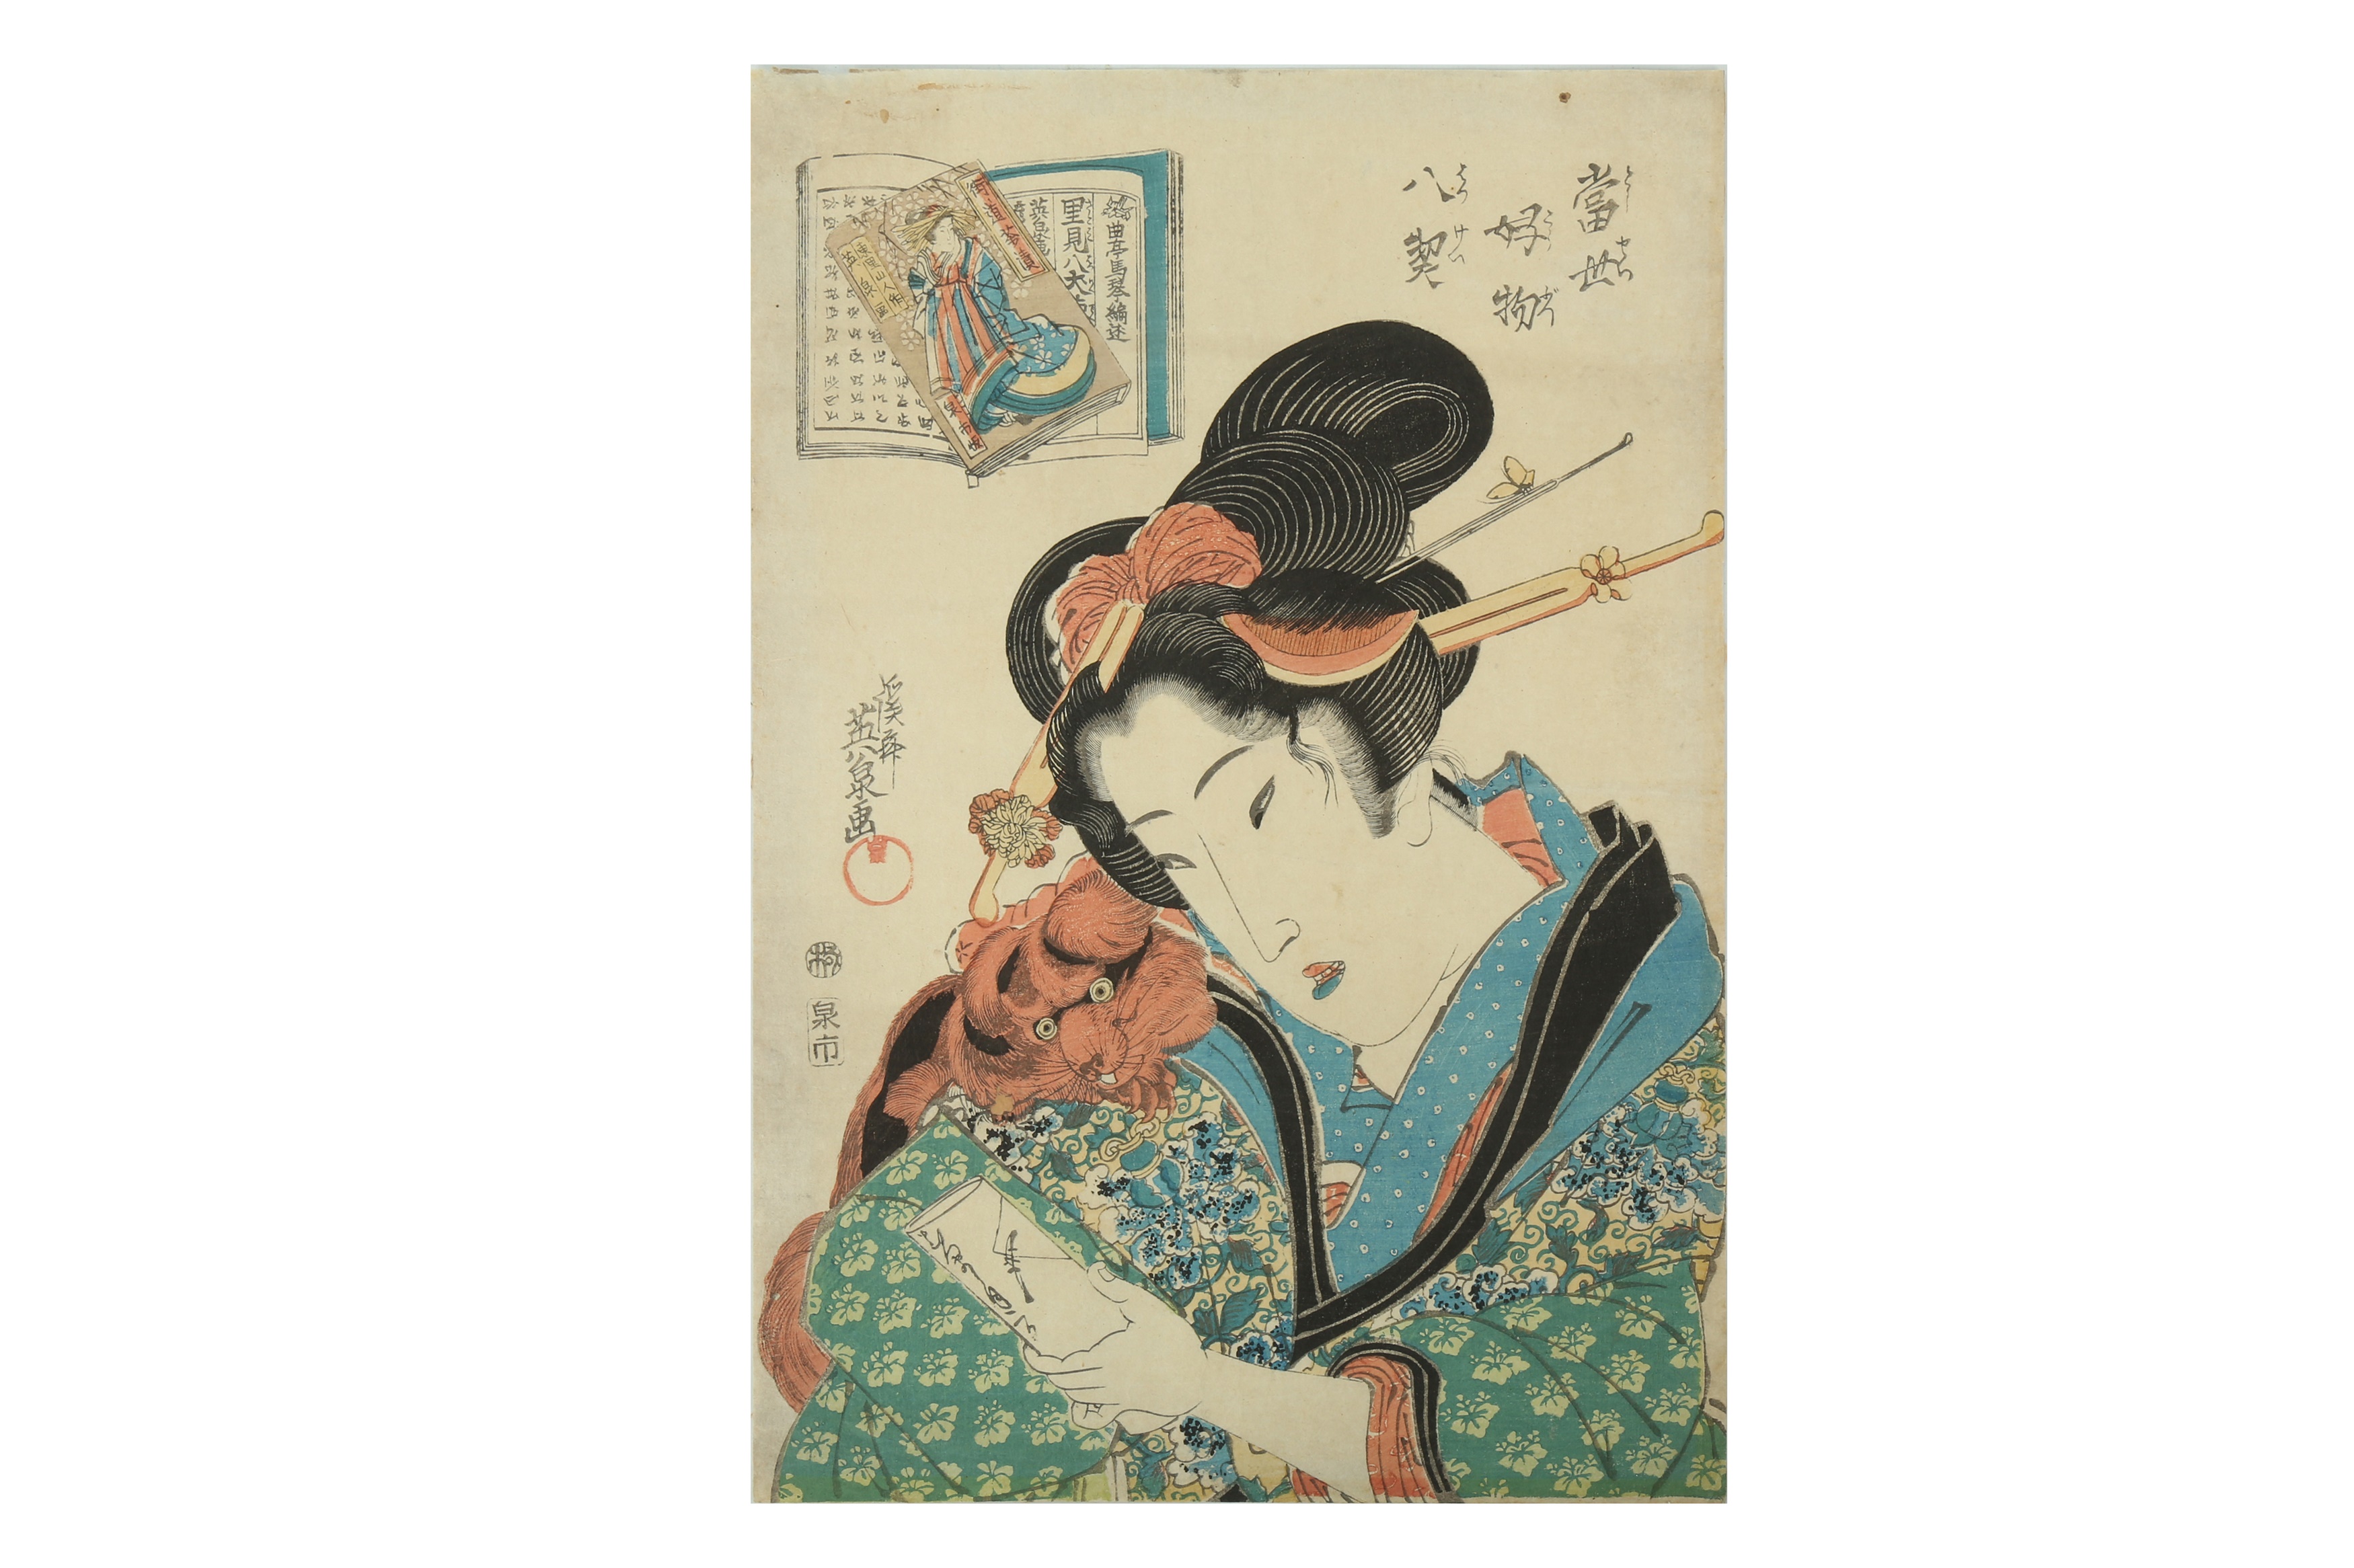 A JAPANESE WOODBLOCK PRINT BY KEISAI EISEN (1790 - 1848).